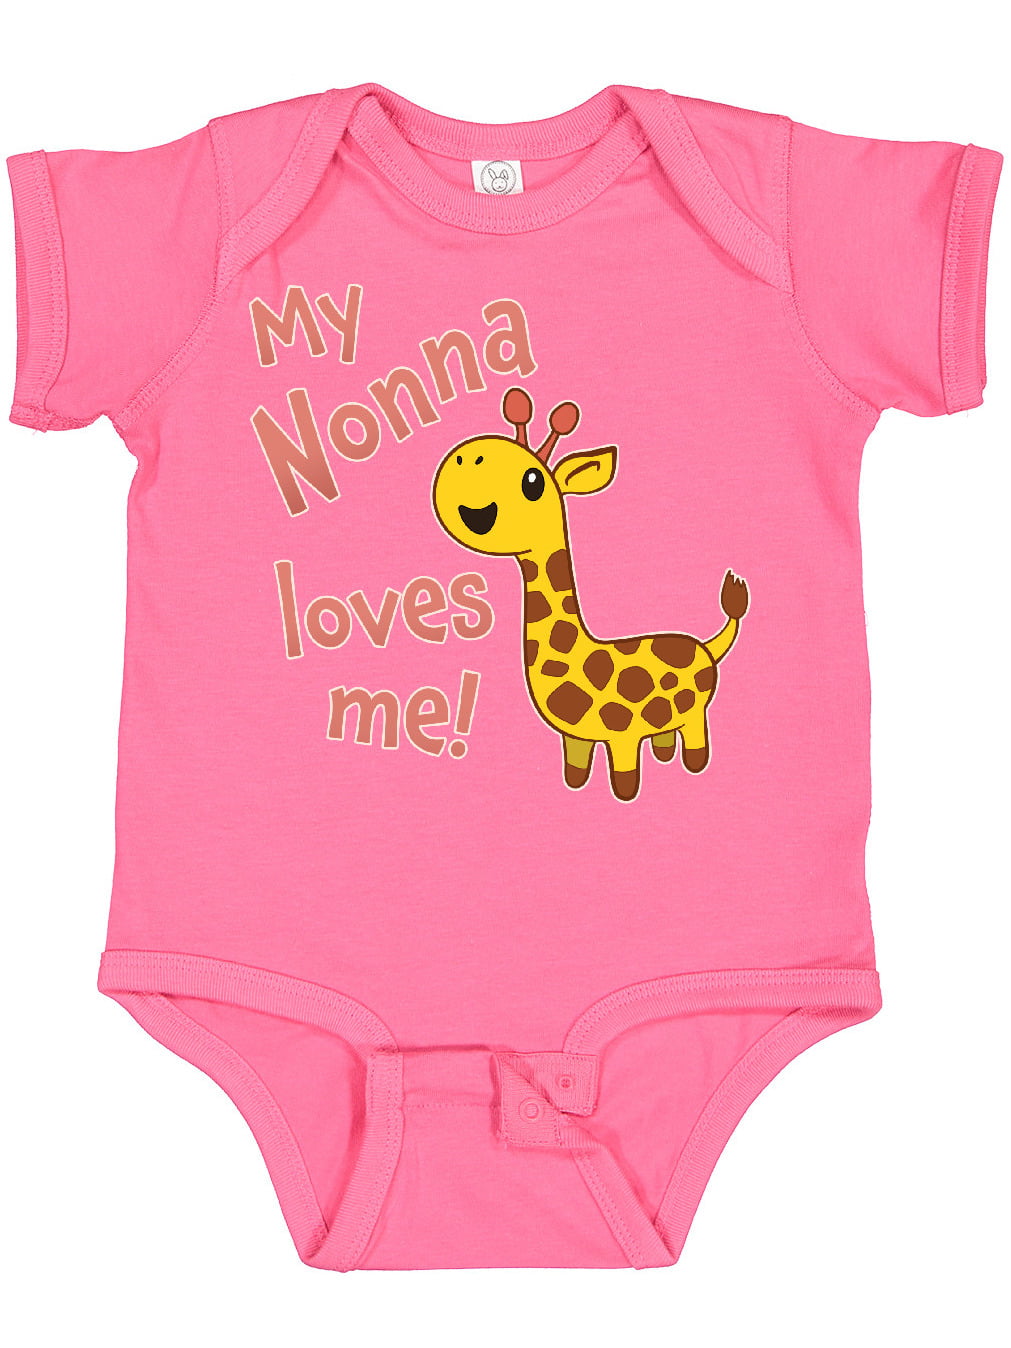 New Unisex Infant Baby Romper Sleep and Play Set "Giraffe" 3-6 months 